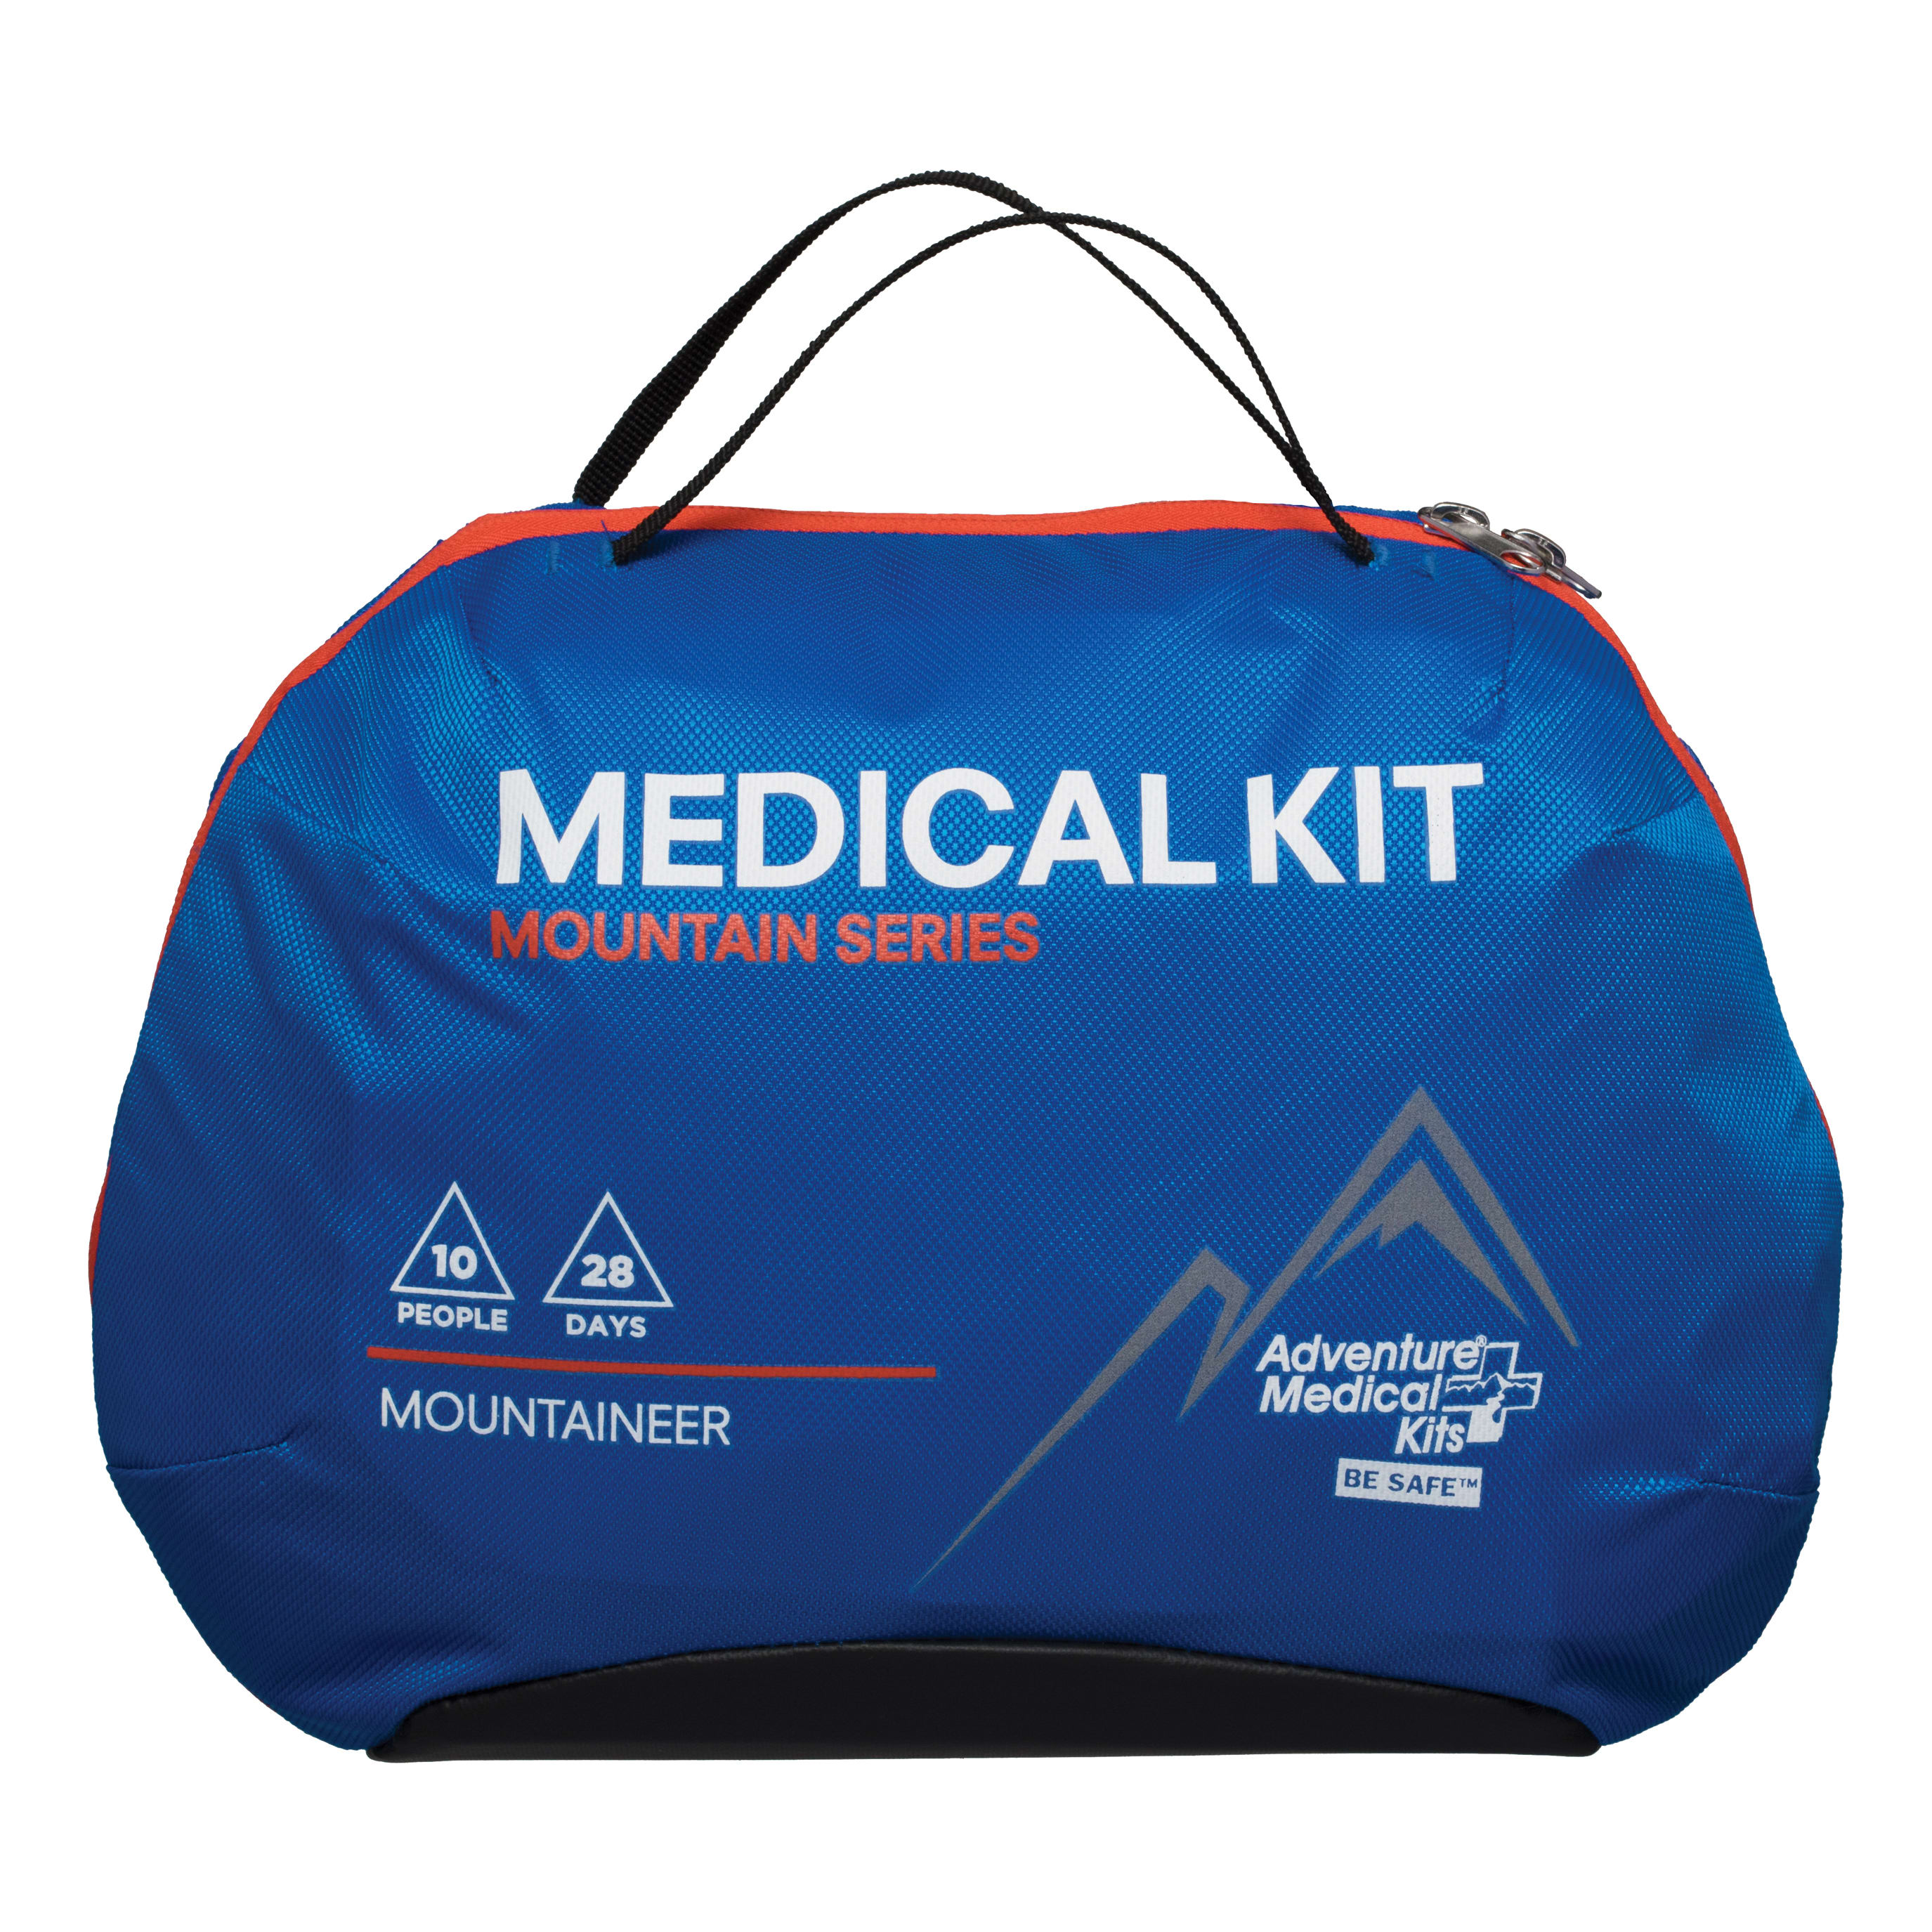 Adventure Medical Kits® Mountain Series Mountaineer Medical Kit